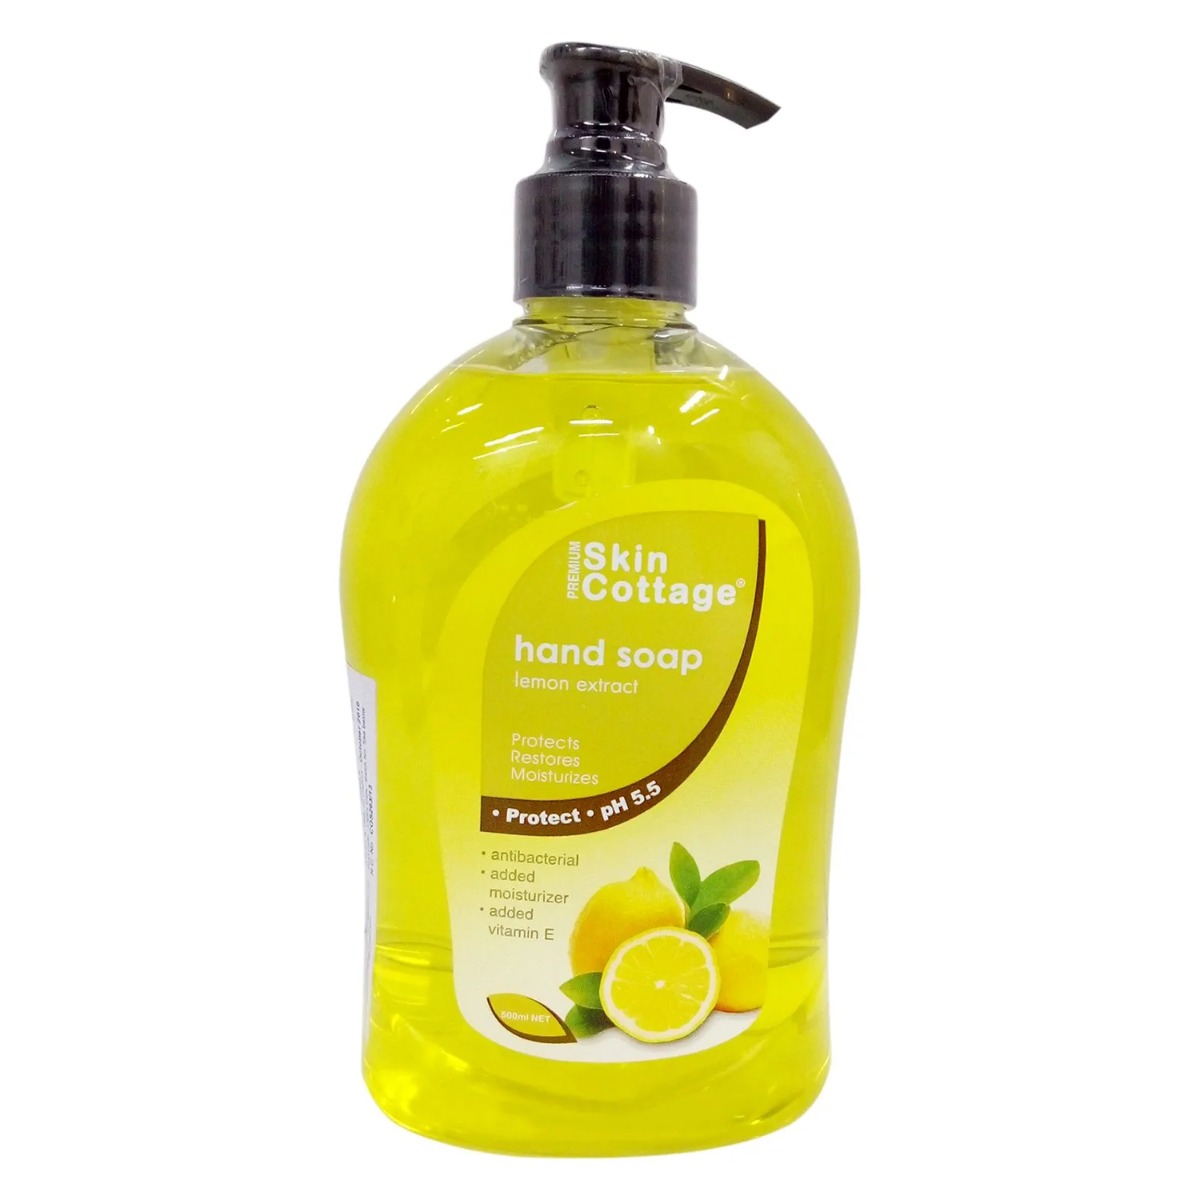 Skin Cottage Handwash Lemon Extract, 500ml